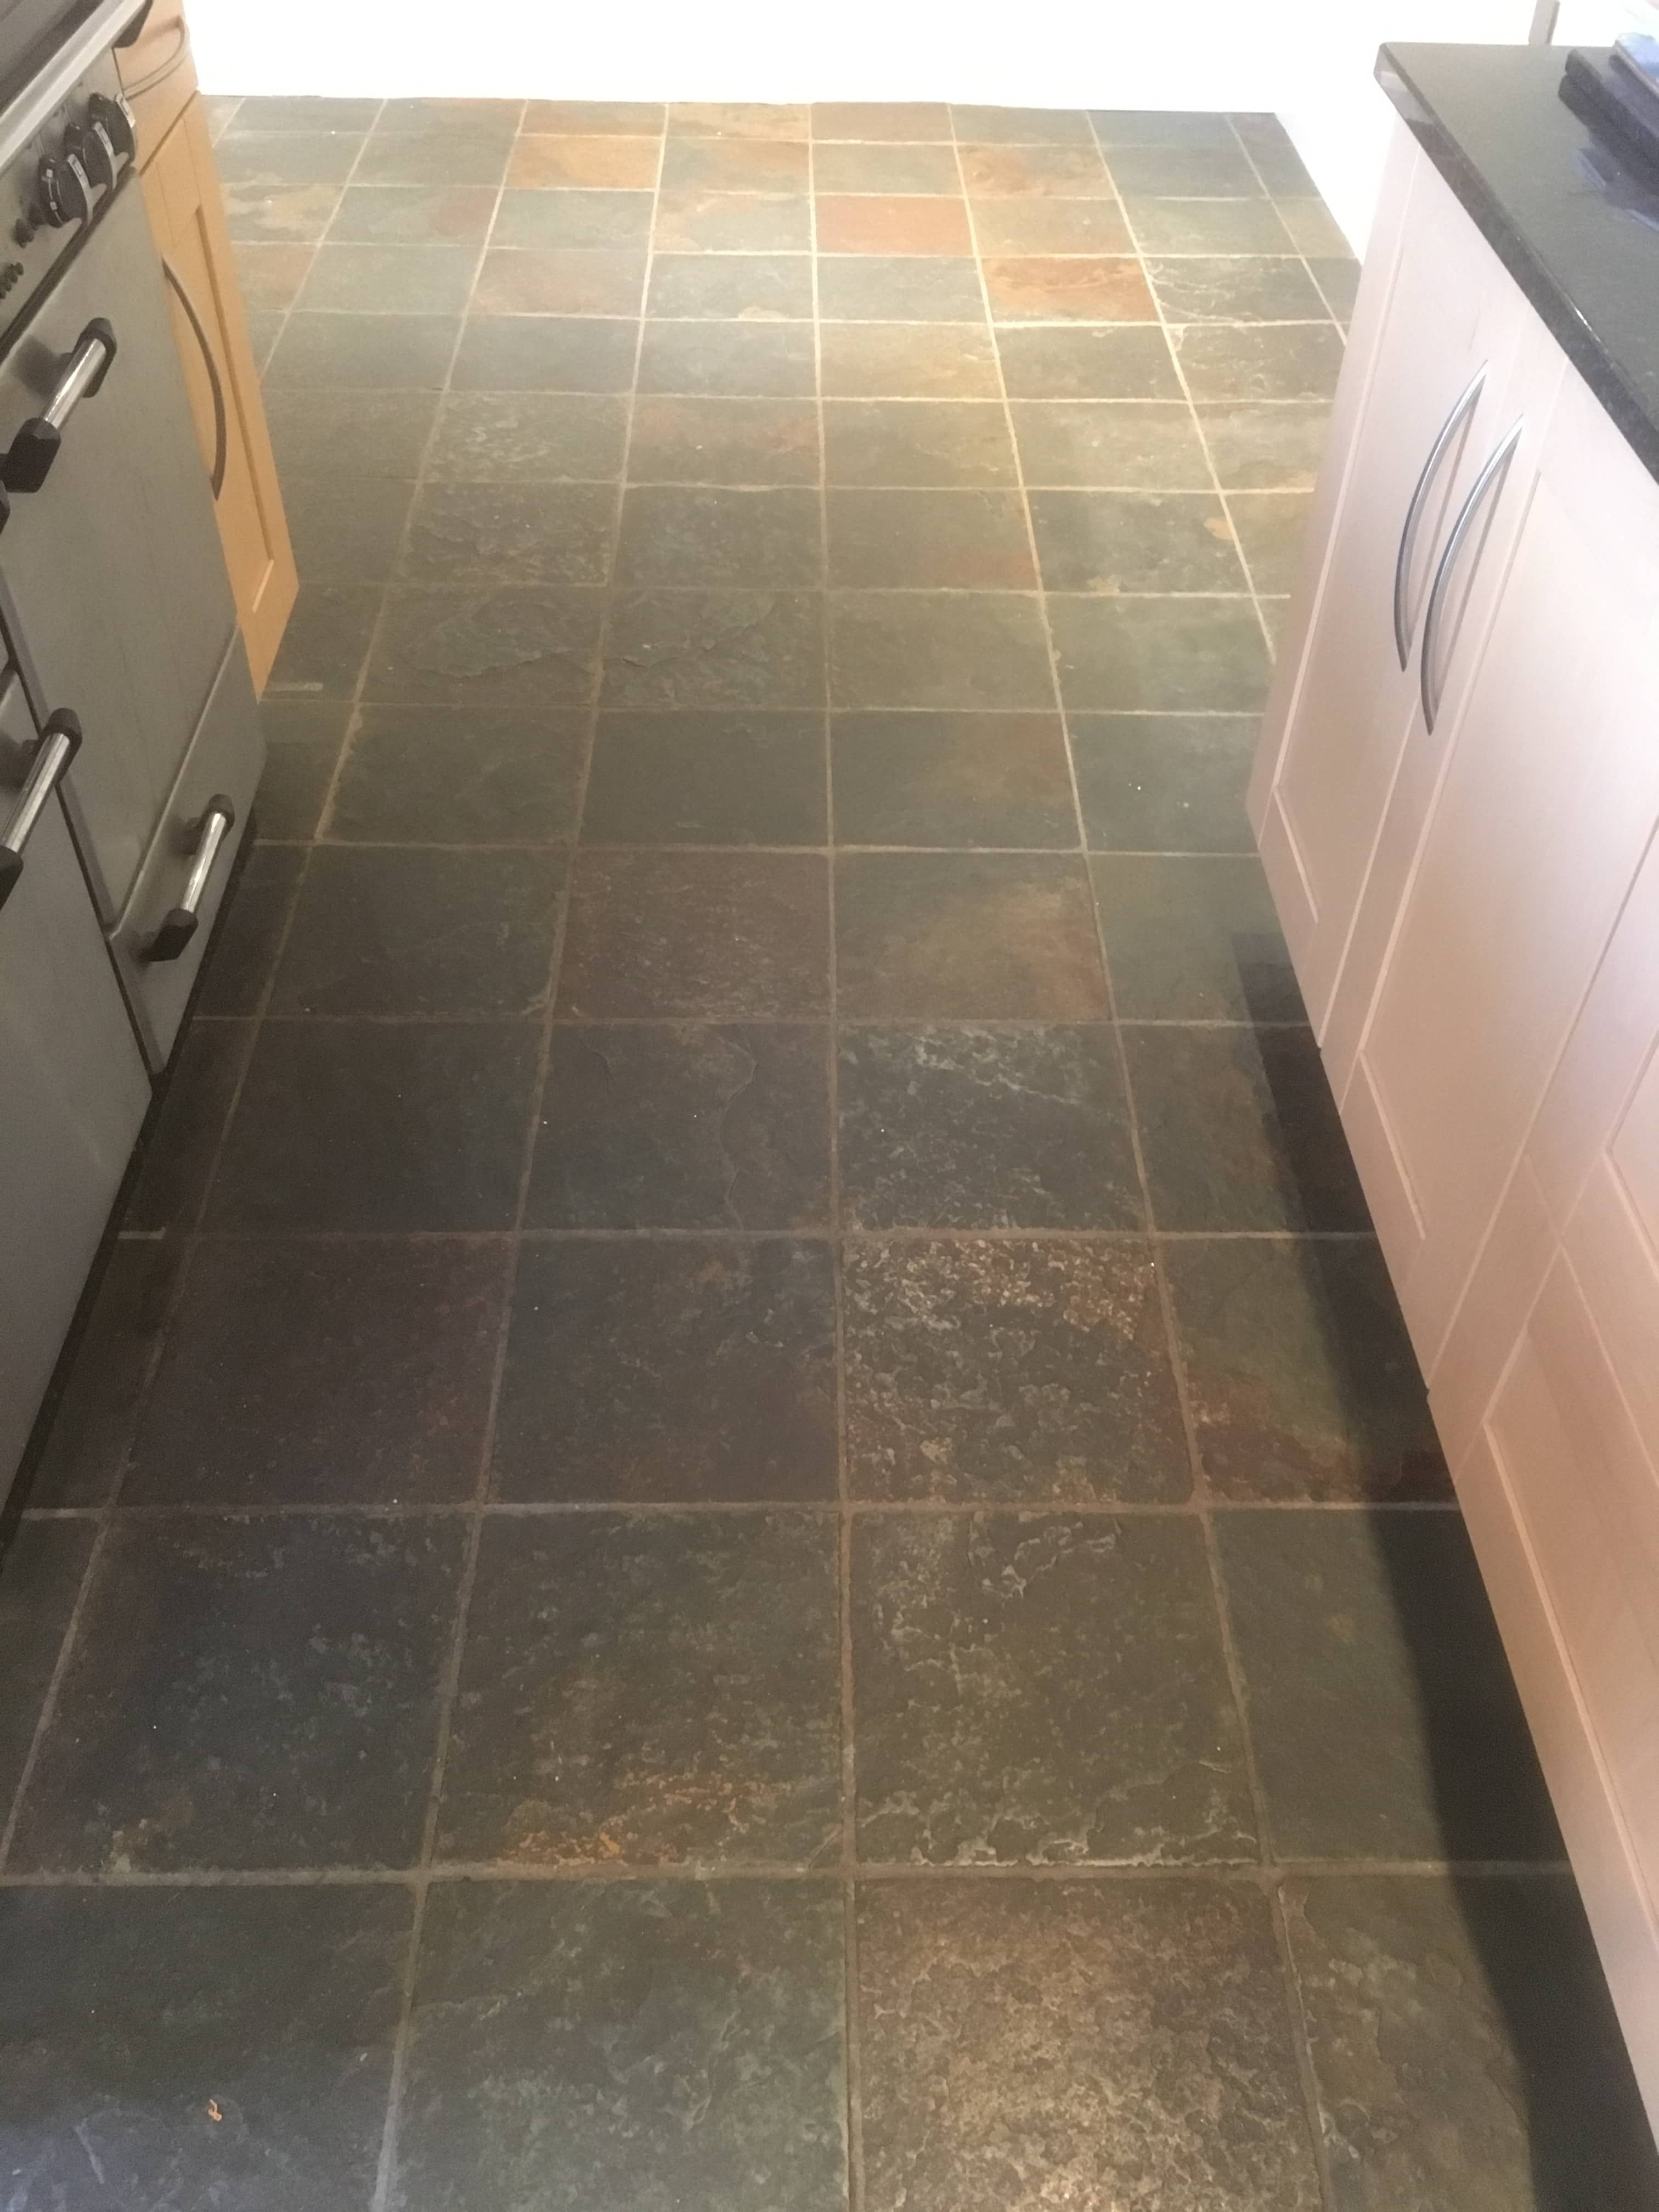 Coloured Slate Floor Tiles Before Cleaning Abingdon